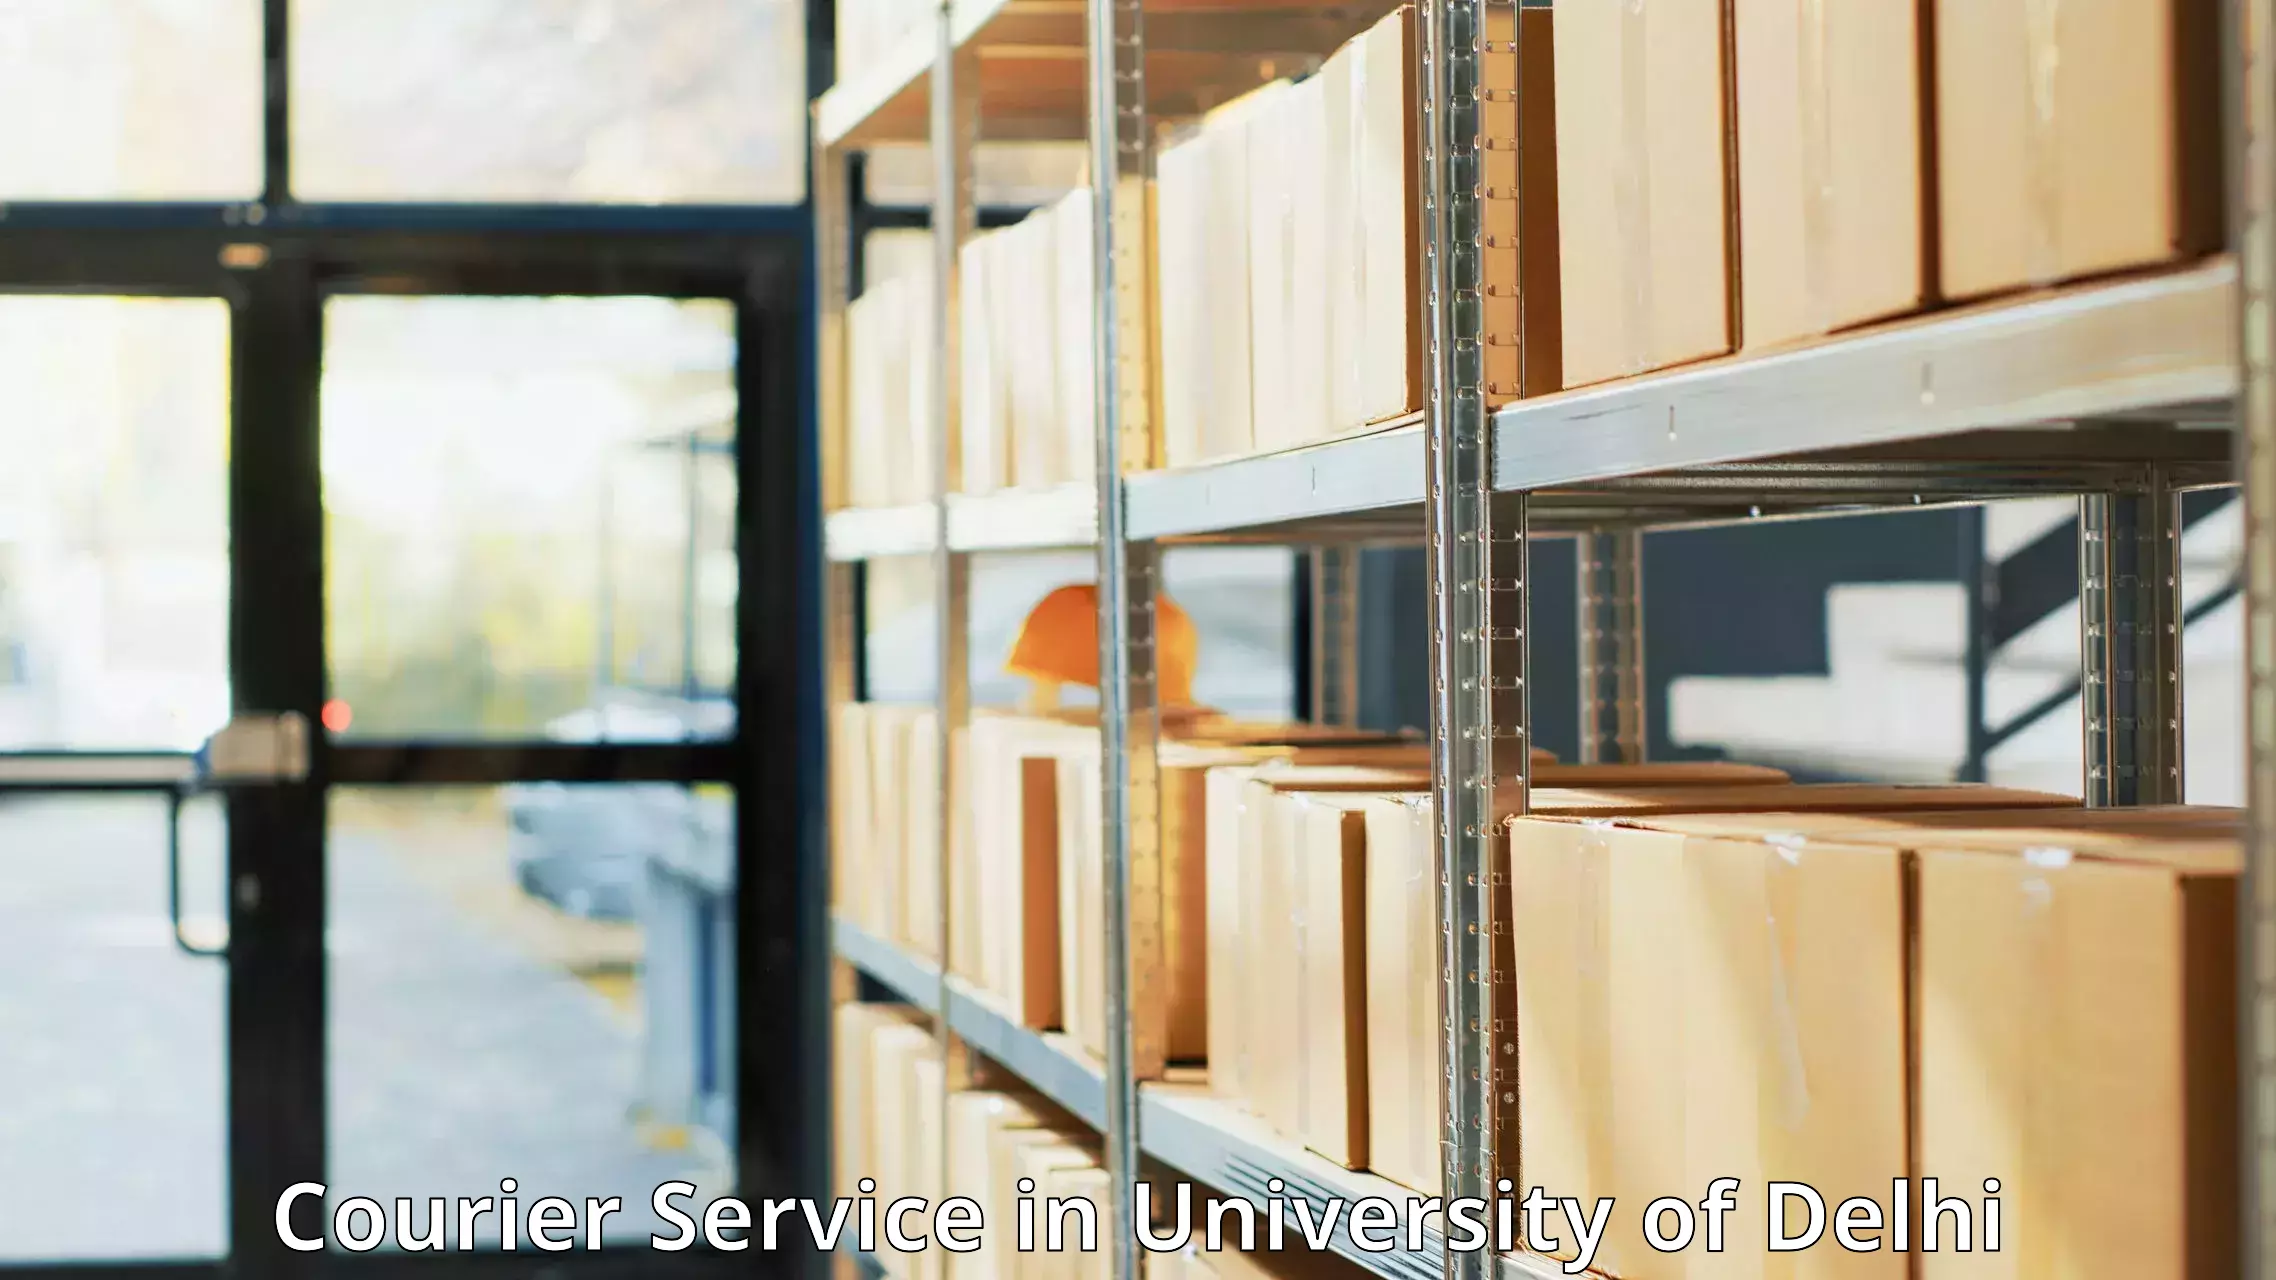 Efficient parcel service in University of Delhi